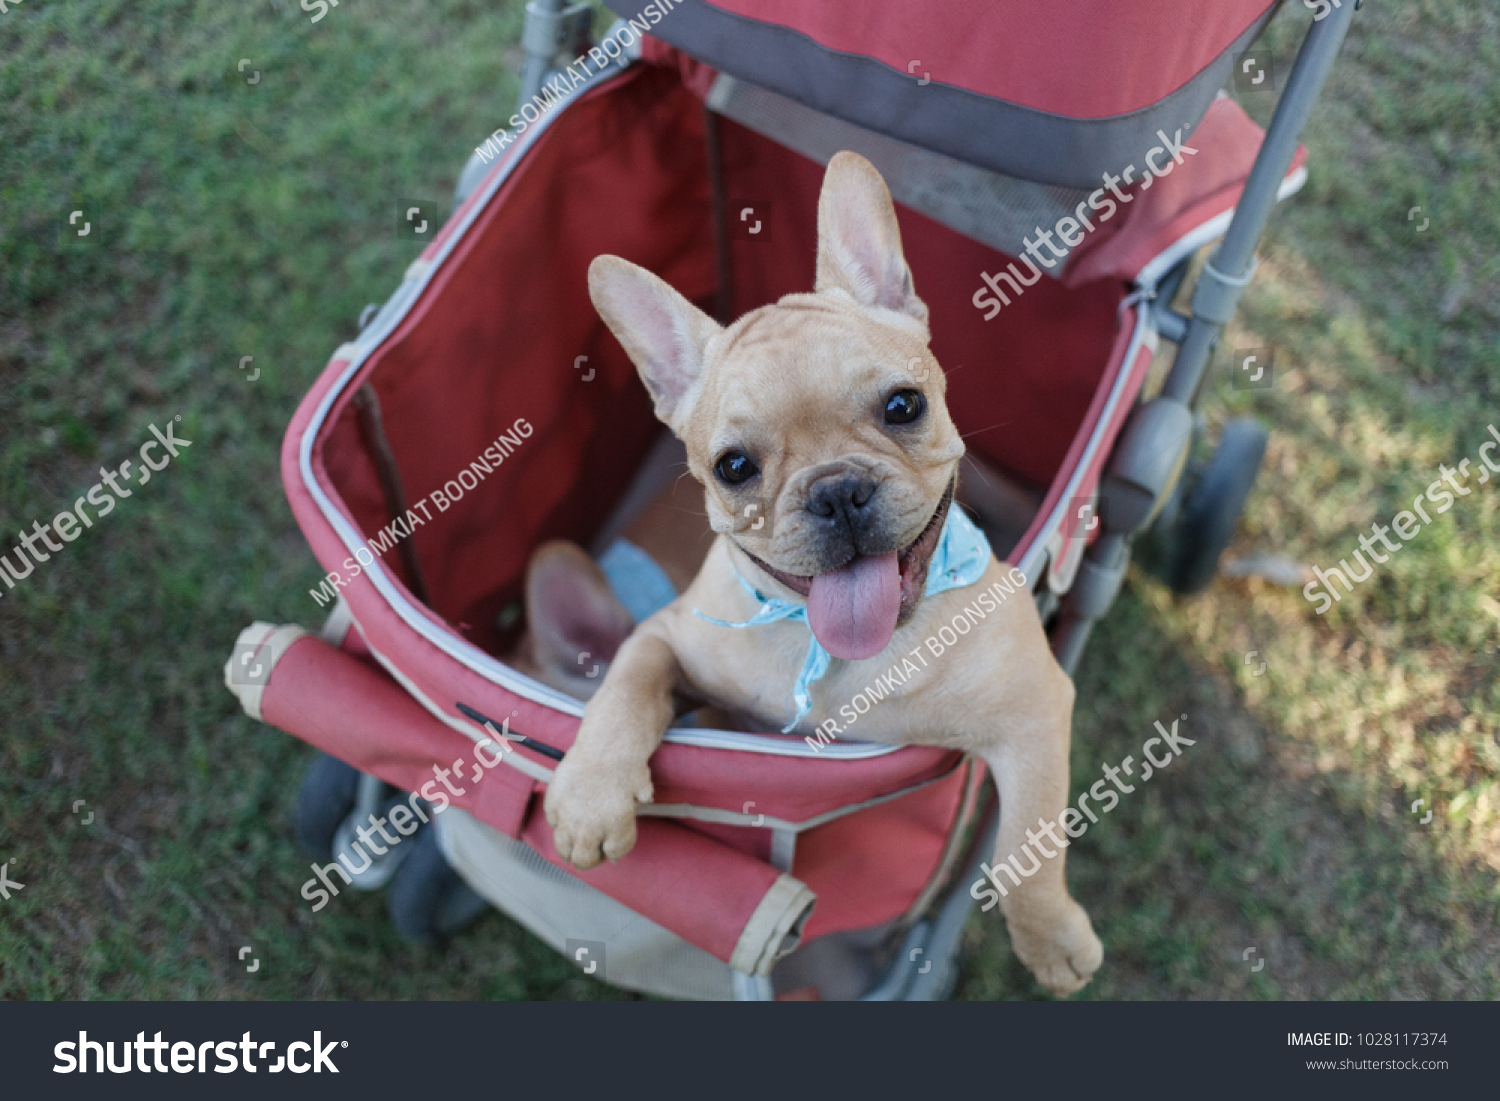 french bulldog in stroller